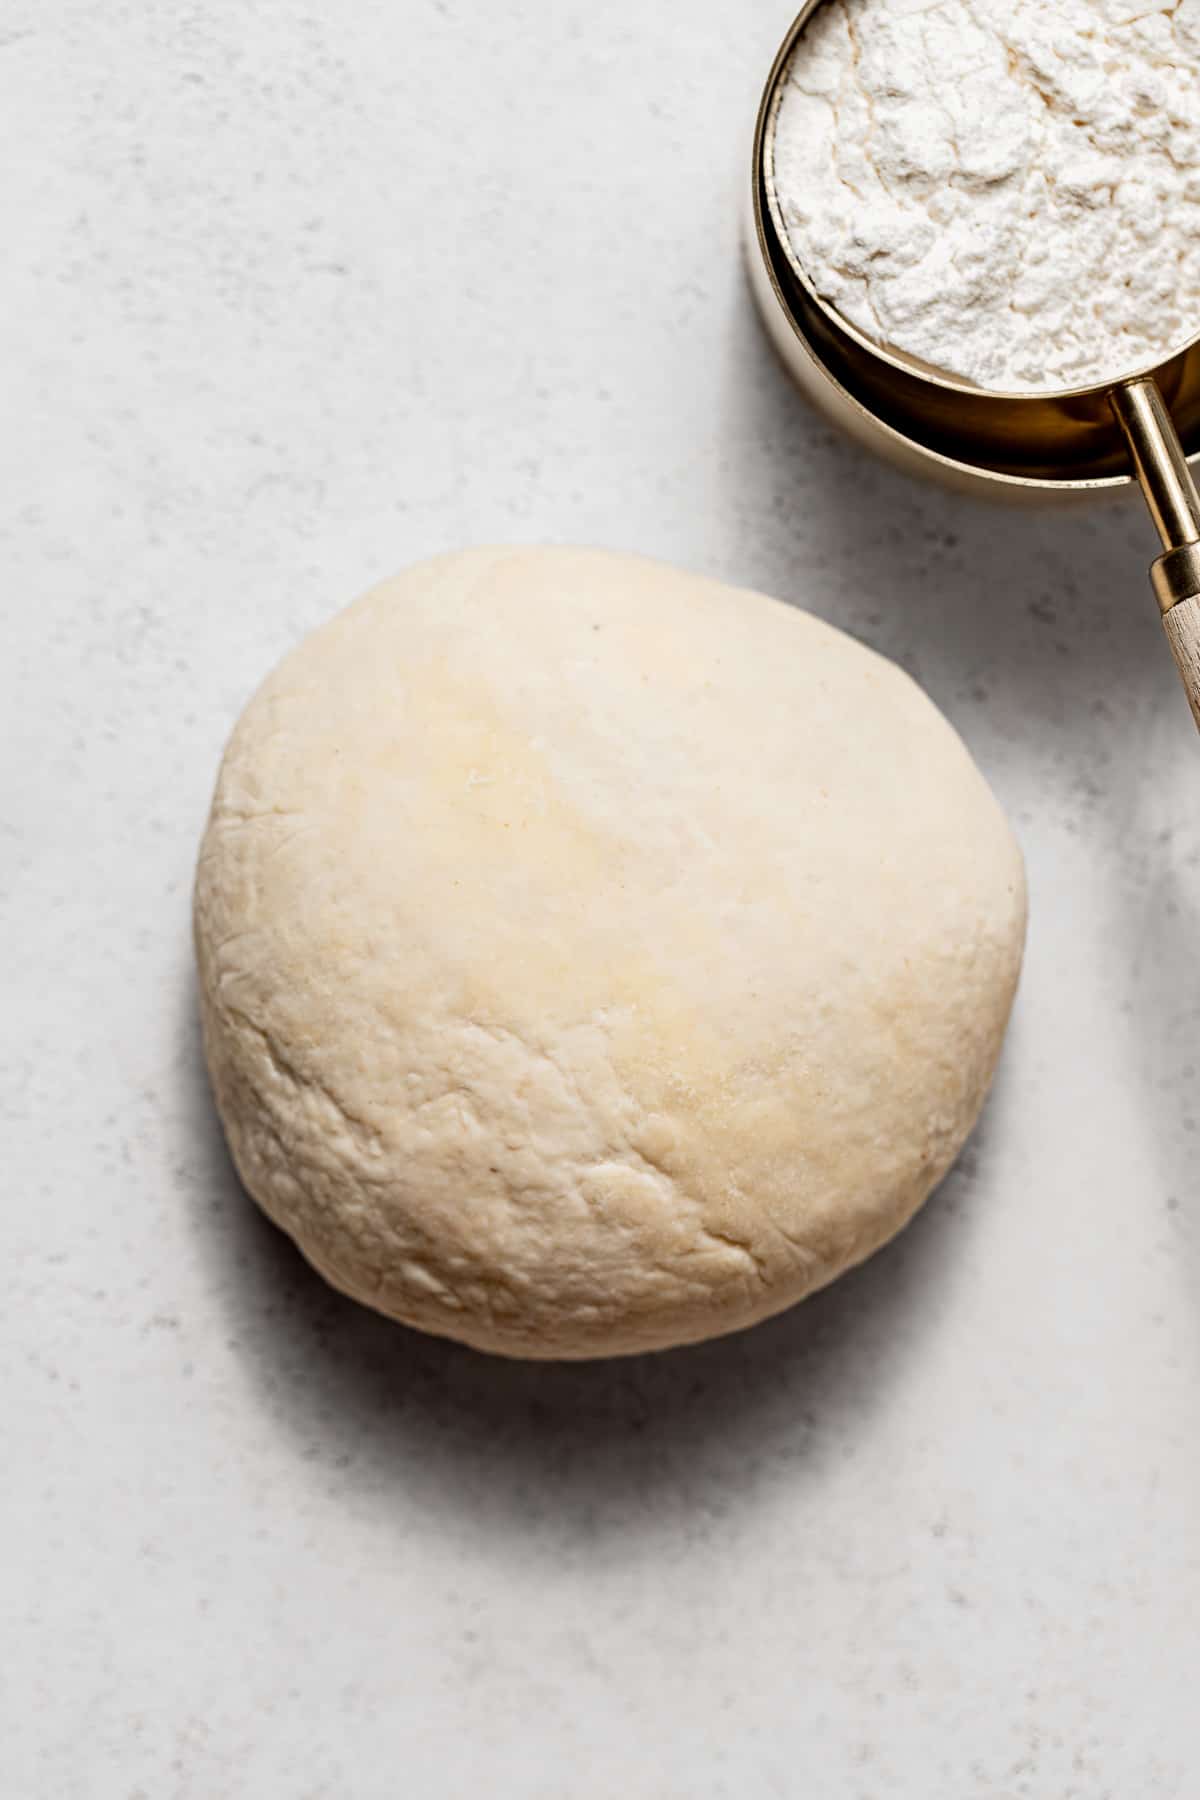 pie dough shaped into disk.